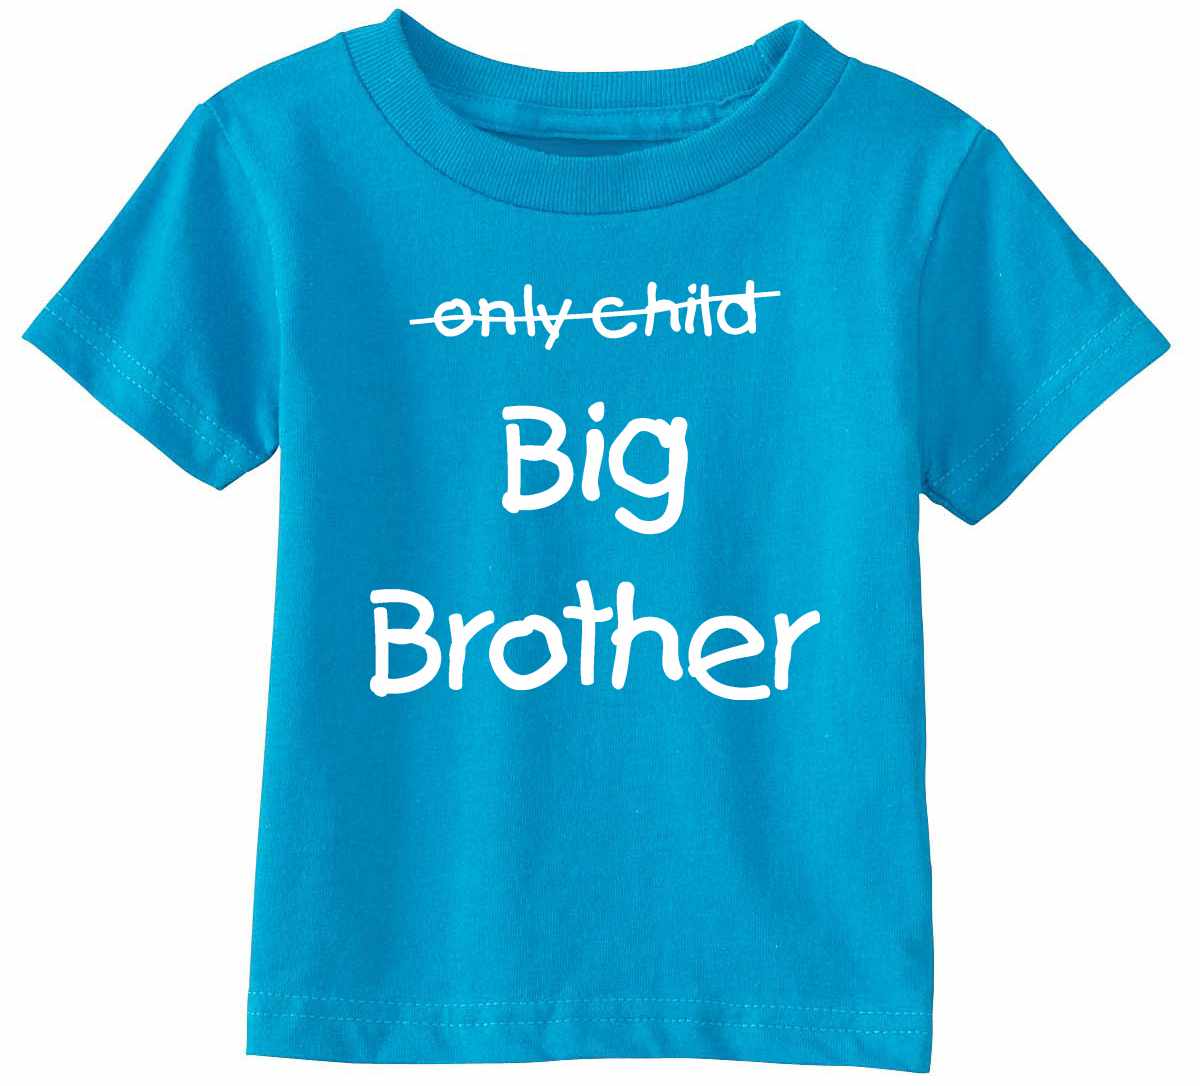 Only Child BIG BROTHER Infant/Toddler 